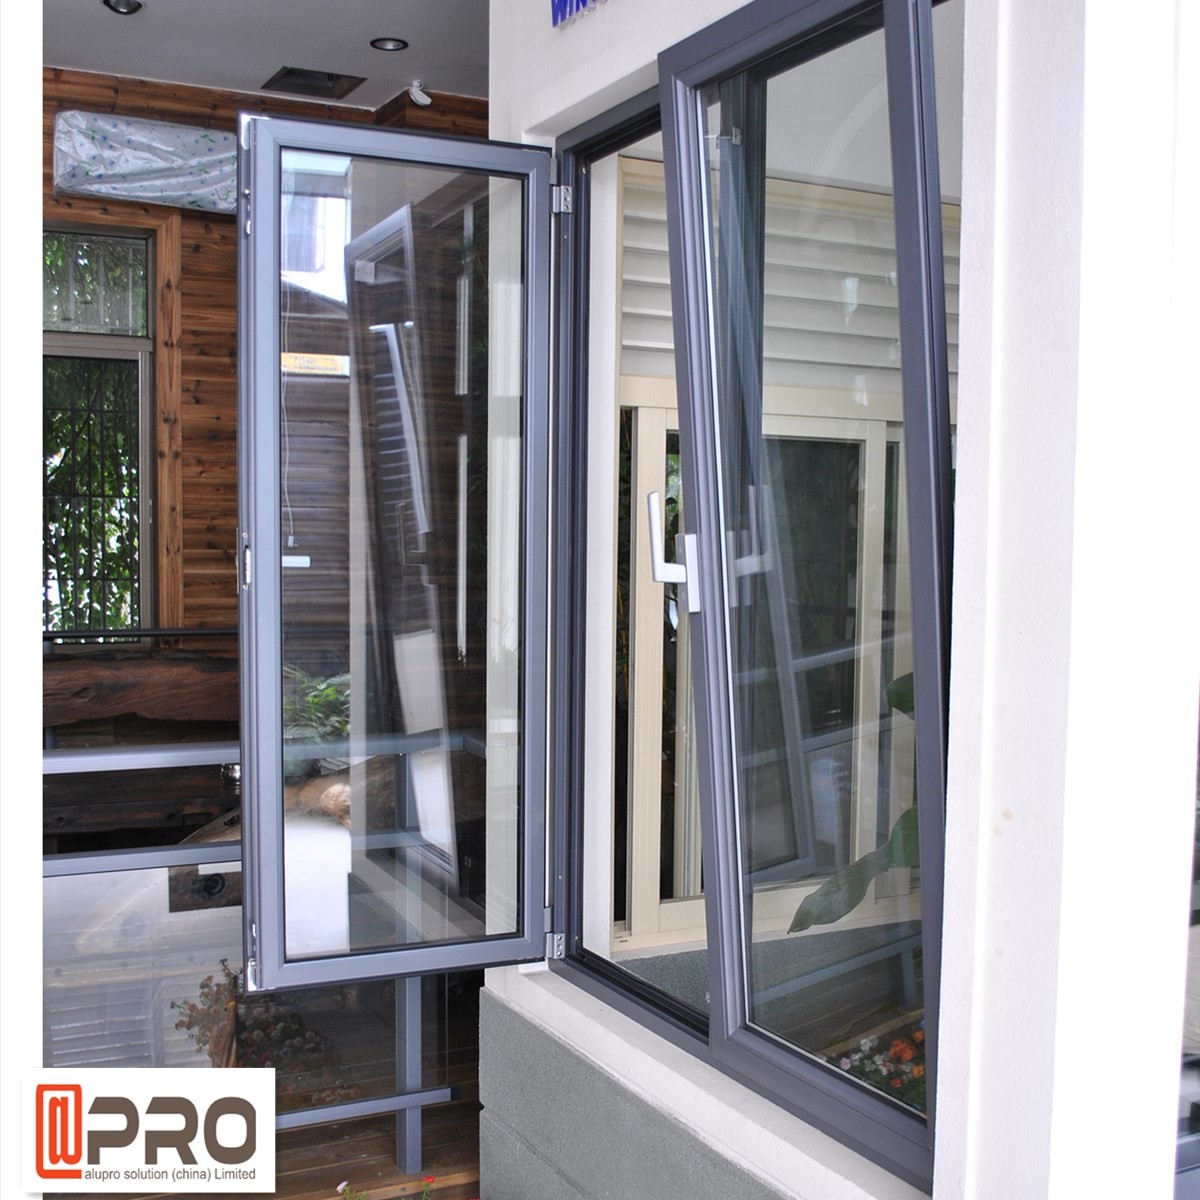 awnings vertical window,aluminium window awnings,window awnings for home,door and window awnings